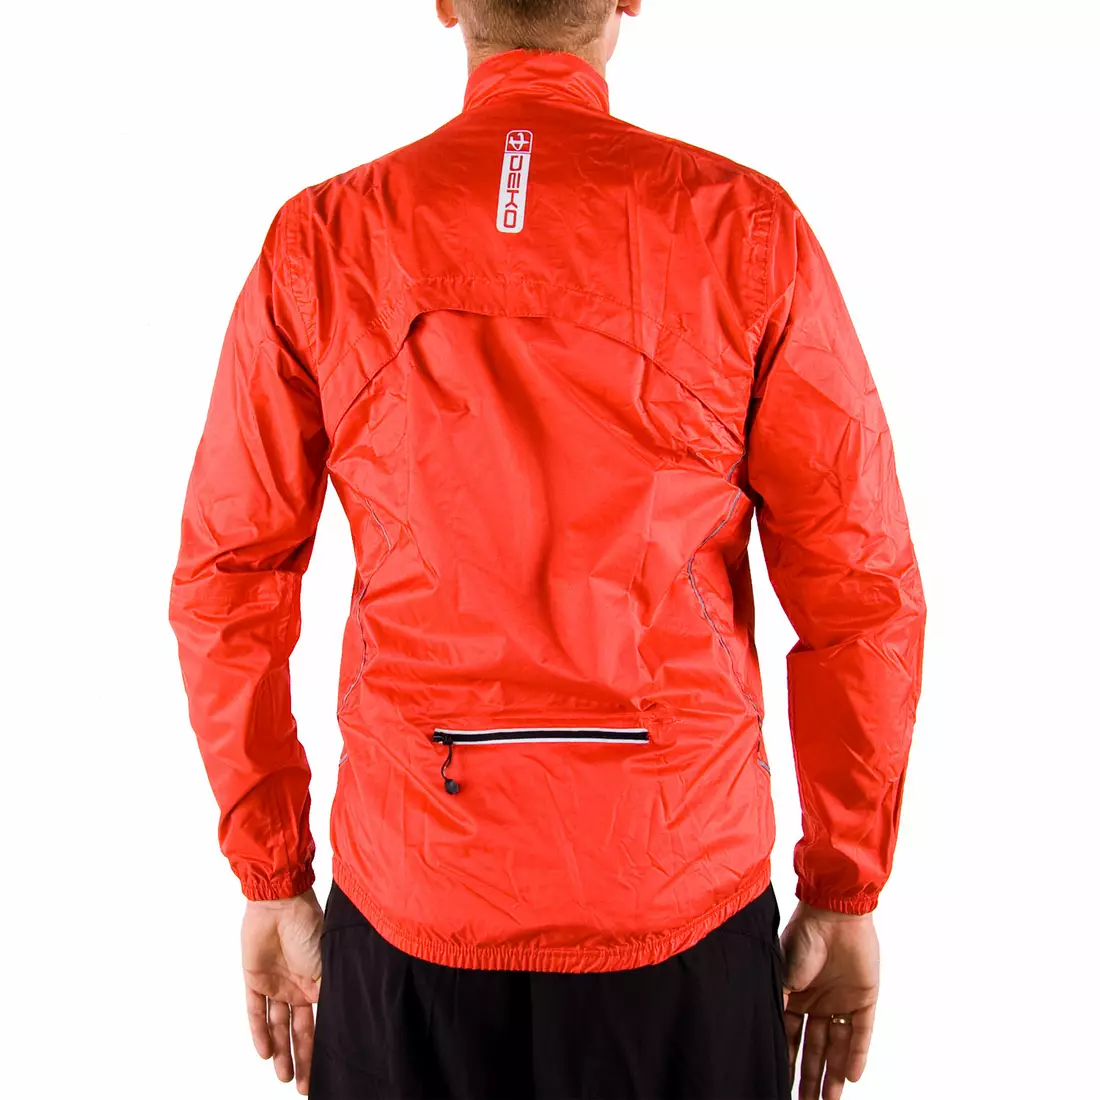 DEKO J1 rain jacket for bicycles Red